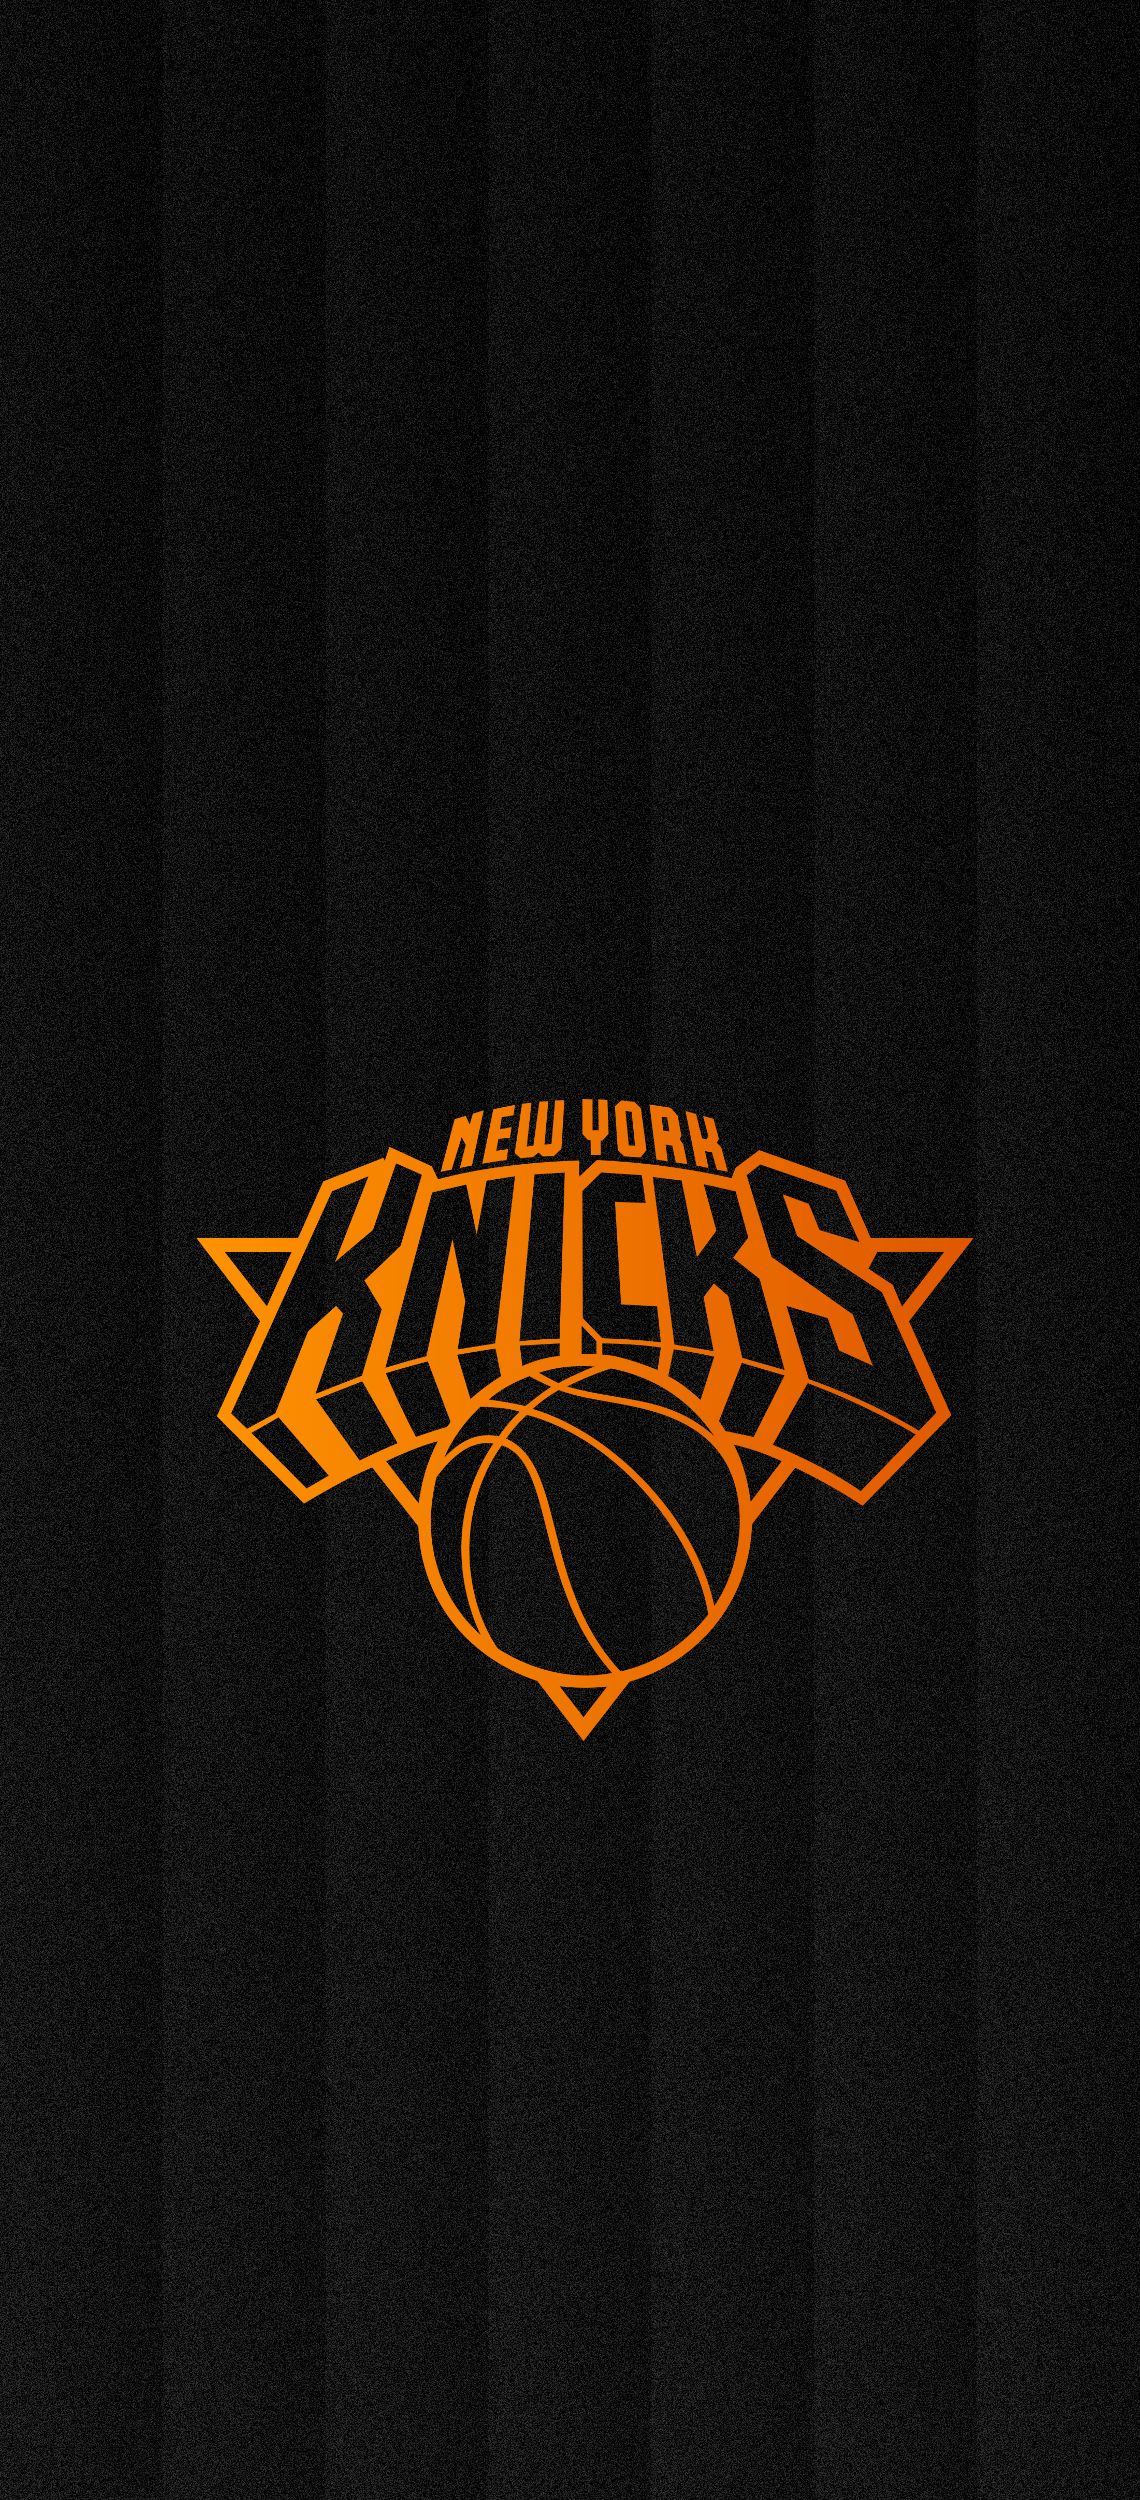 New York Knicks Gradient Wallpaper. New york knicks, Nba basketball teams, Knicks